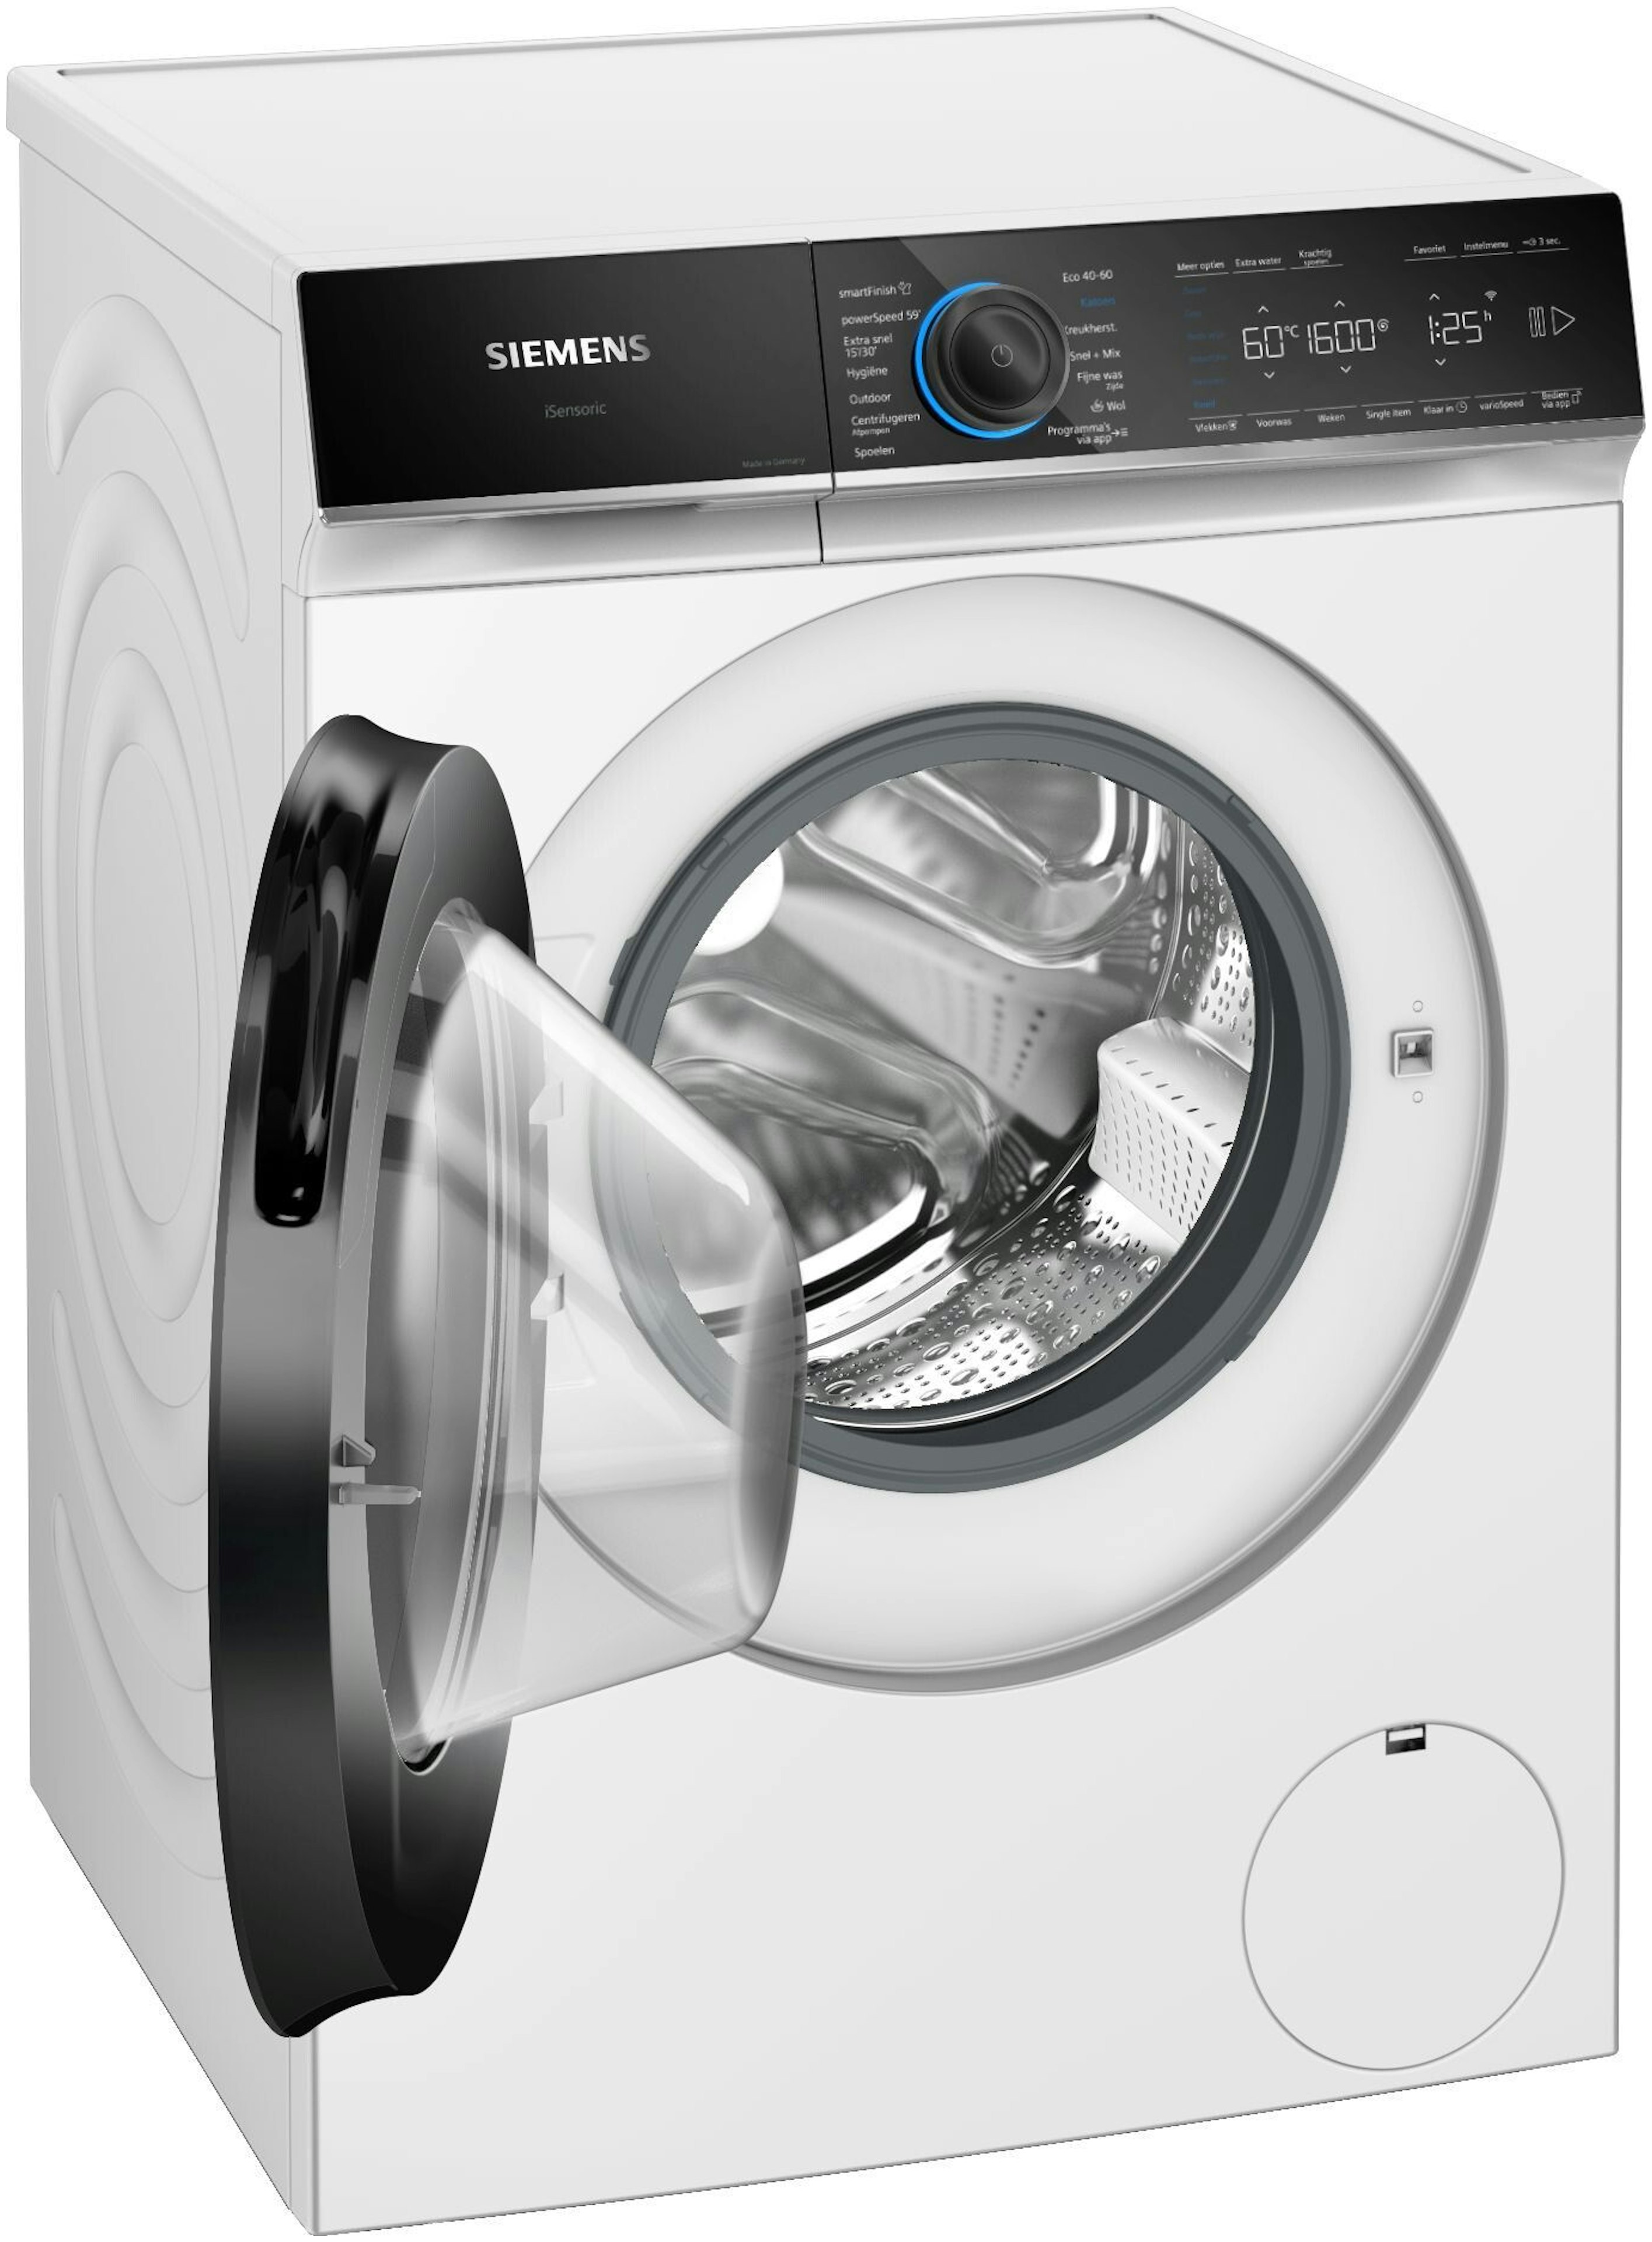 Siemens wasmachine WG56B205NL afbeelding 3